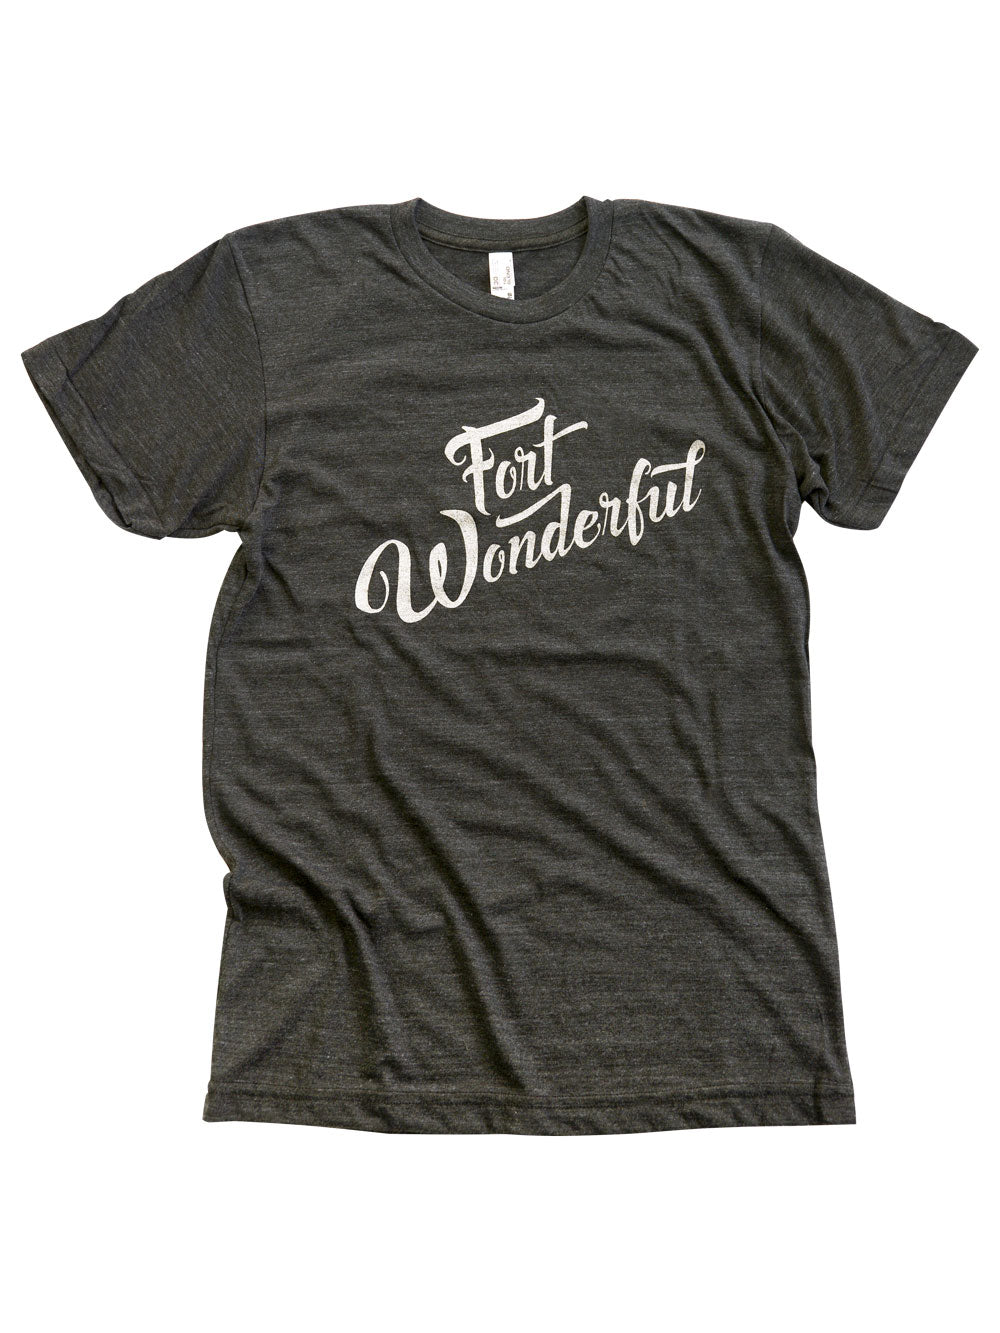 Fort Wonderful black heather t-shirt